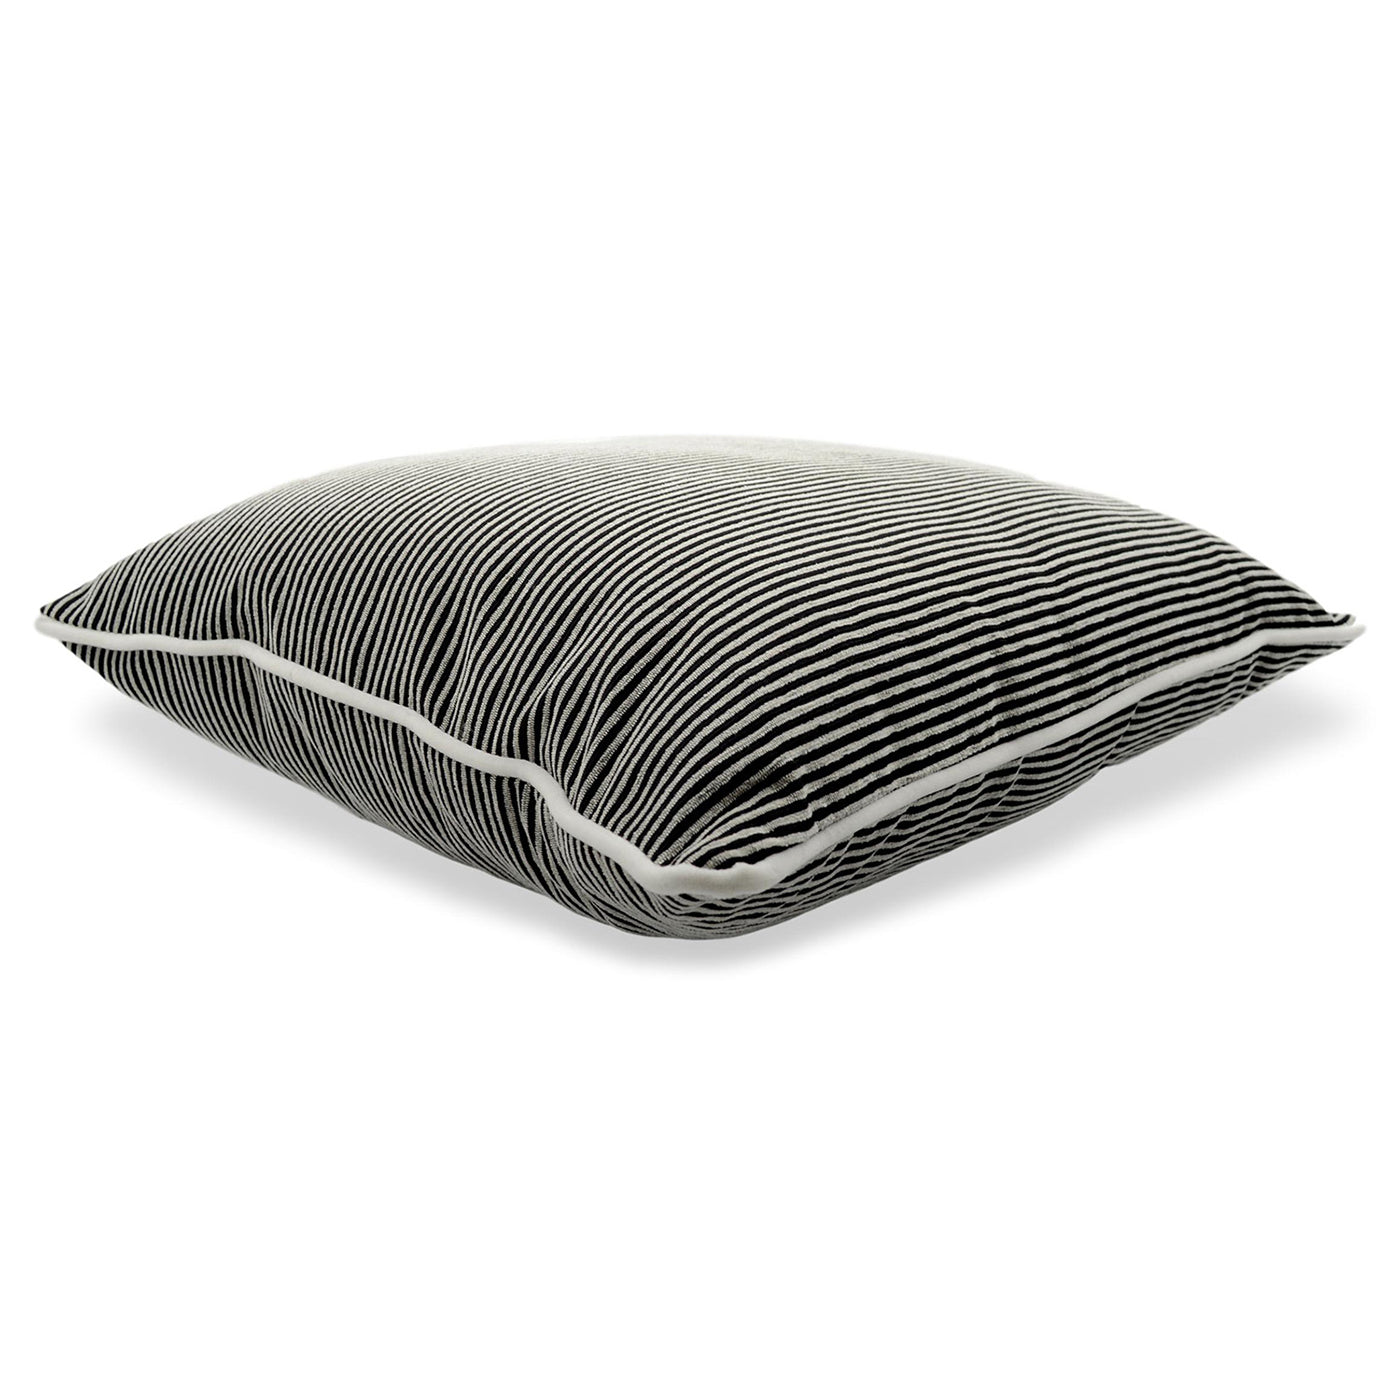 Black and White Carrè Cushion in striped jacquard fabric - Alternative view 1